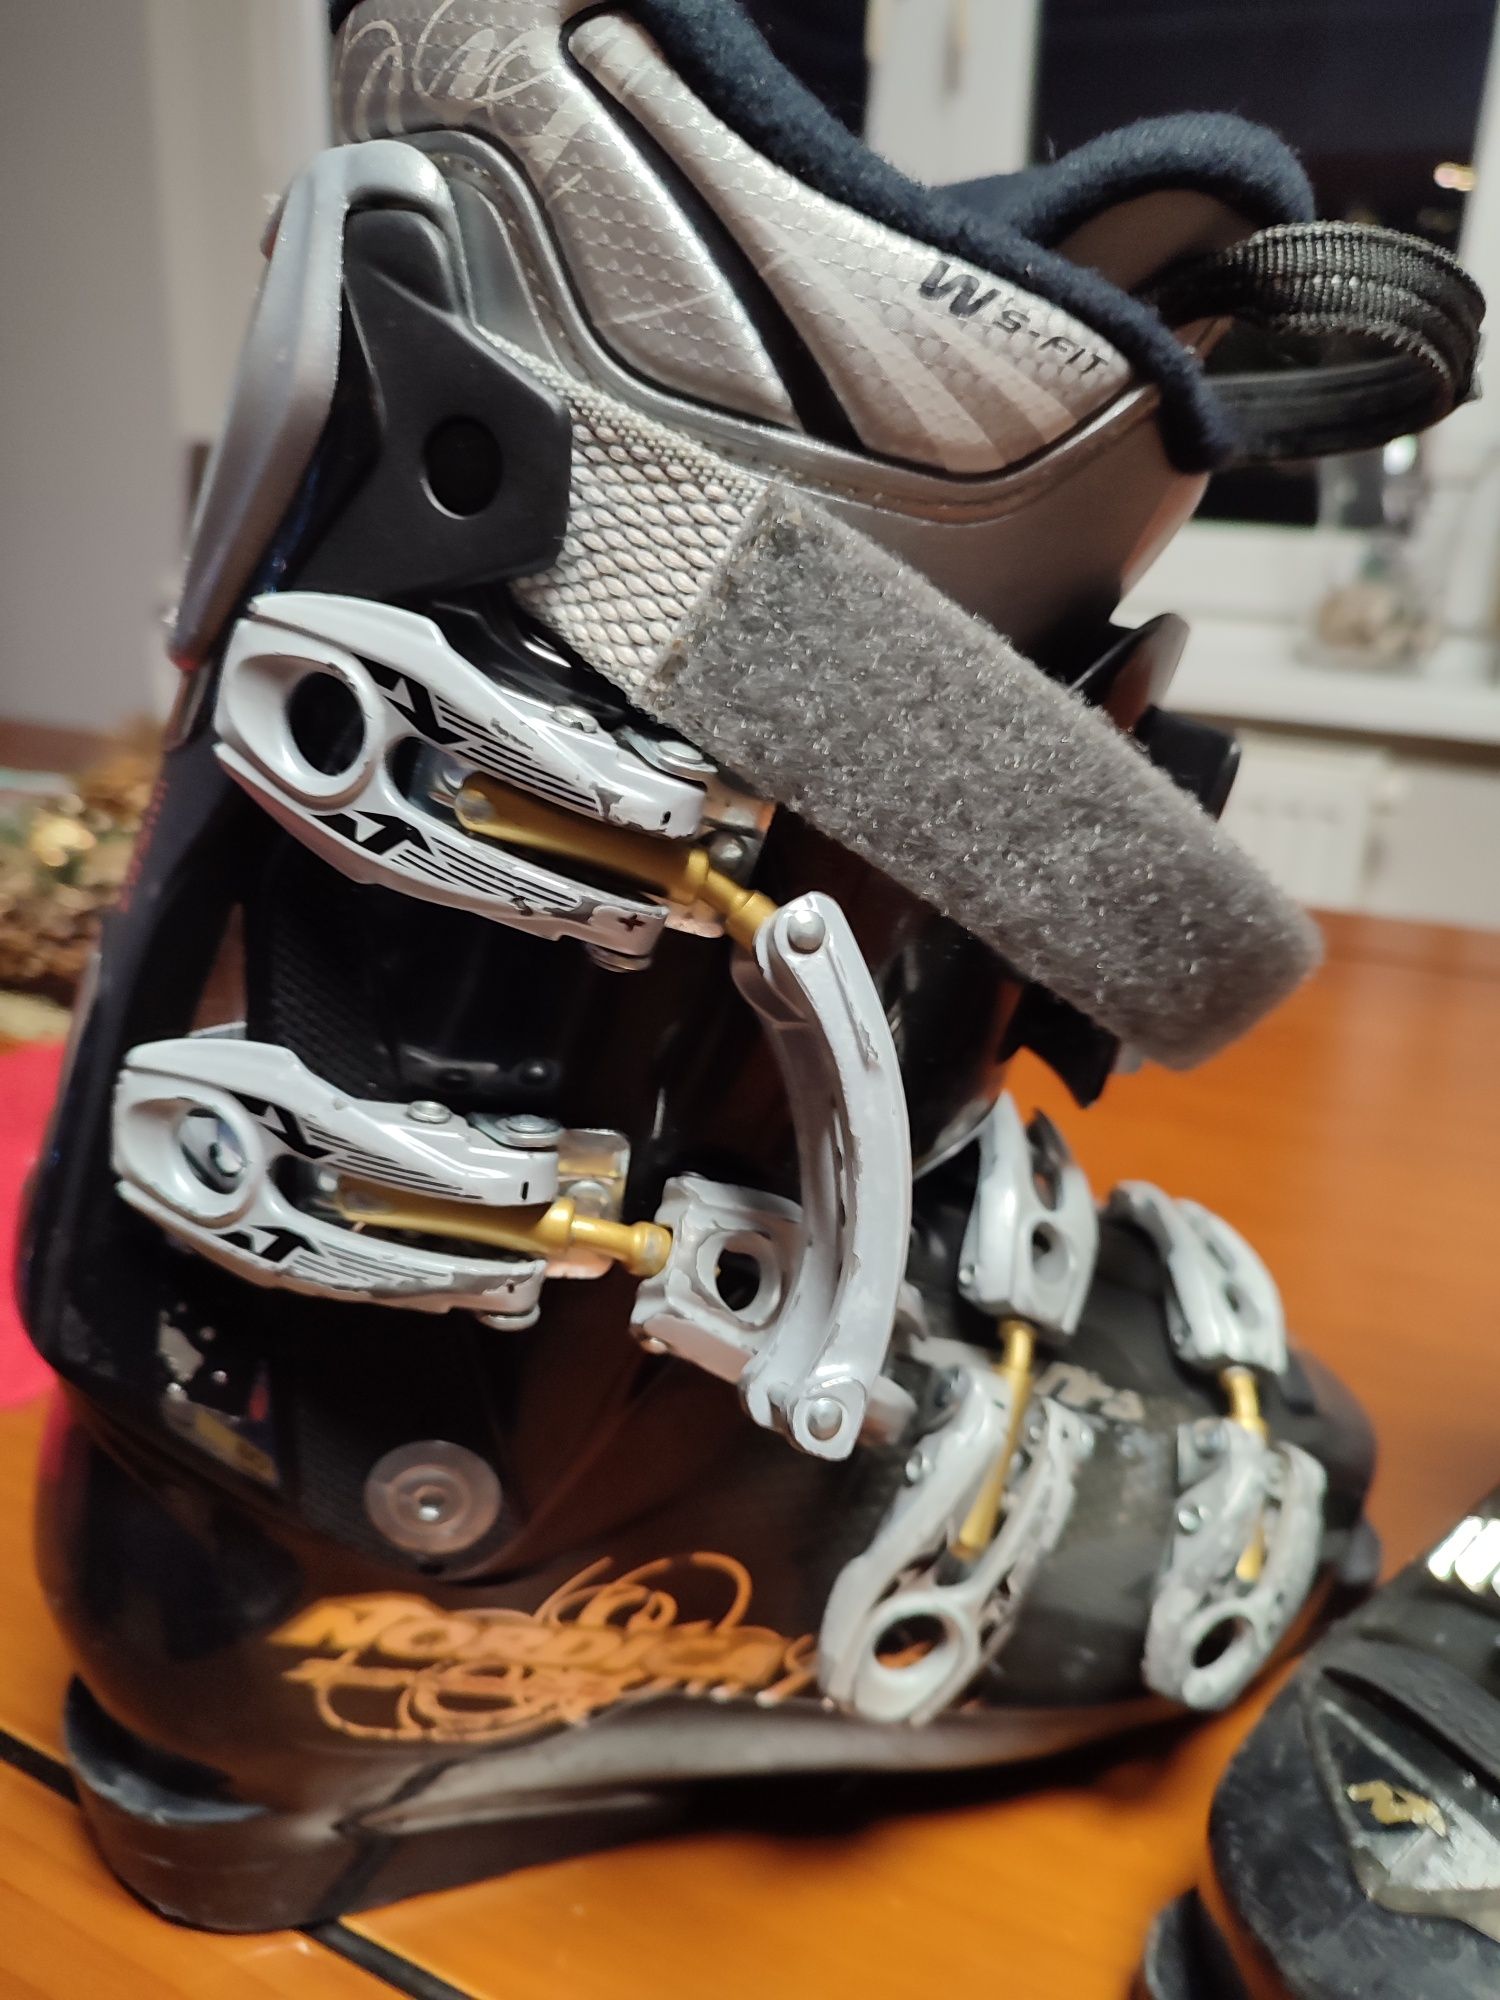 Buty narciarskie damskie Nordica rozmiar 37-38